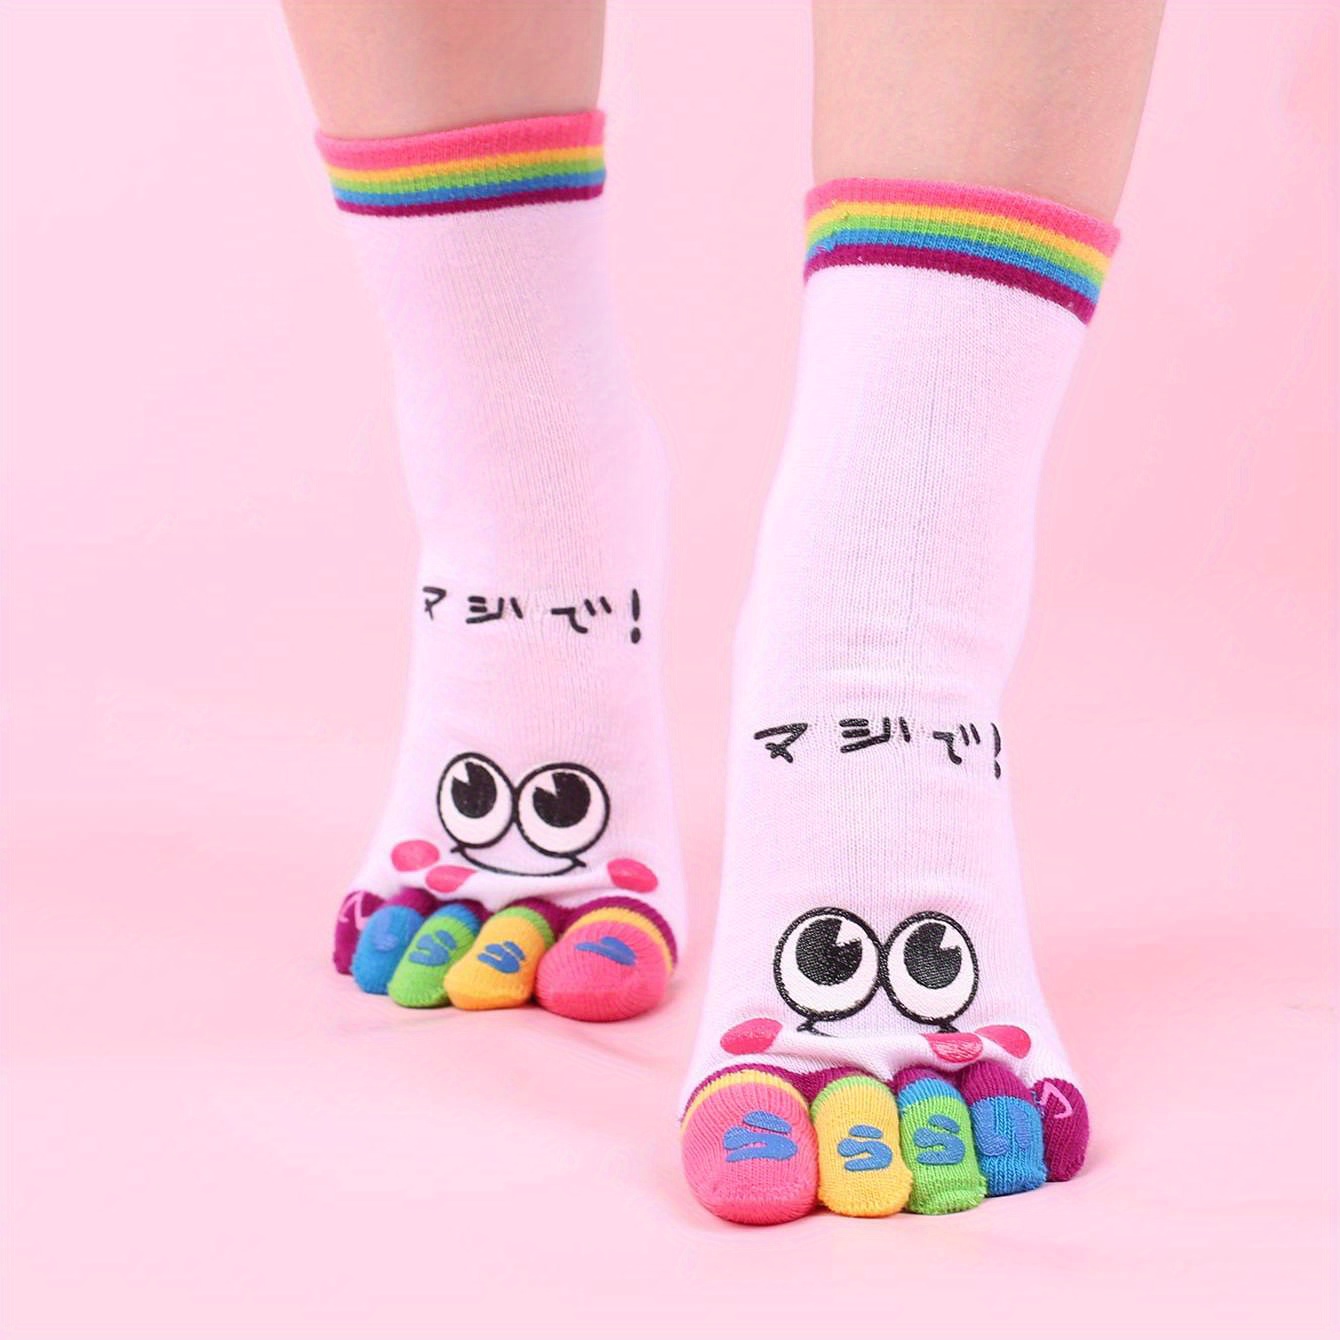 Toe Socks, Five Finger Socks, Rainbow, Black, Pink, Fun Colourful Bright  Socks, Anti Blister, Perfect Gift Size UK 4-7, EU 35-40 -  Norway